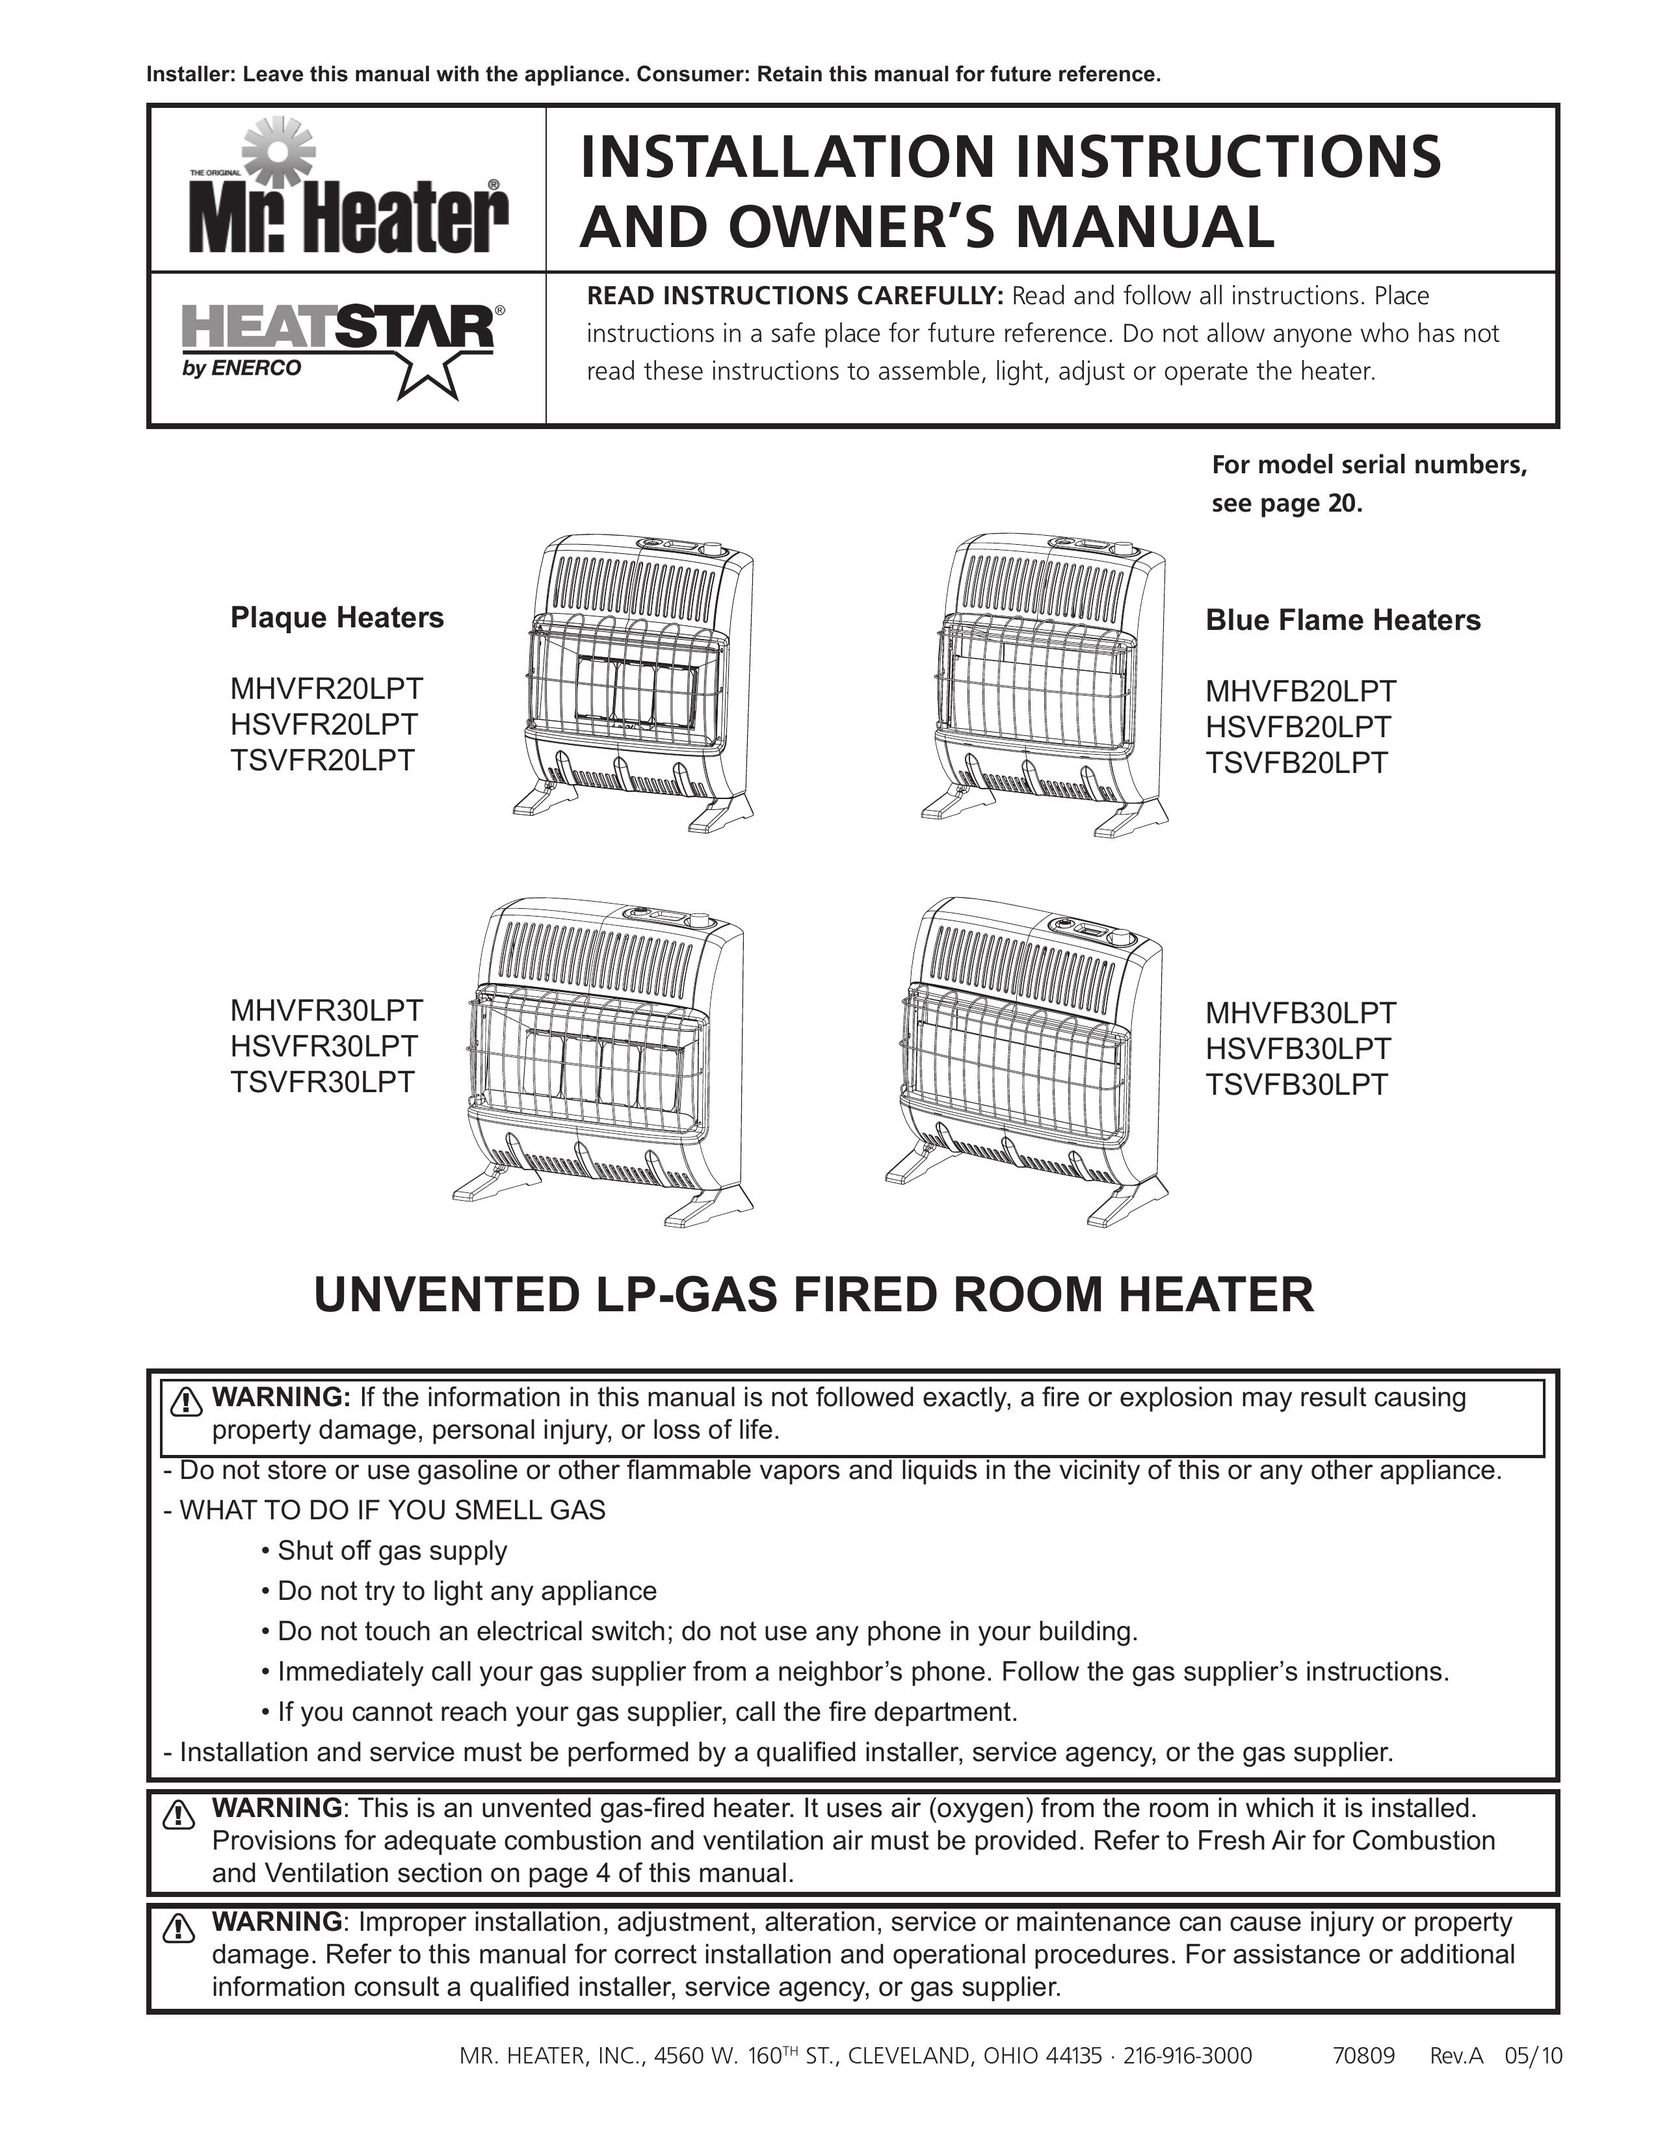 Enerco HSVFR20LPT Gas Heater User Manual